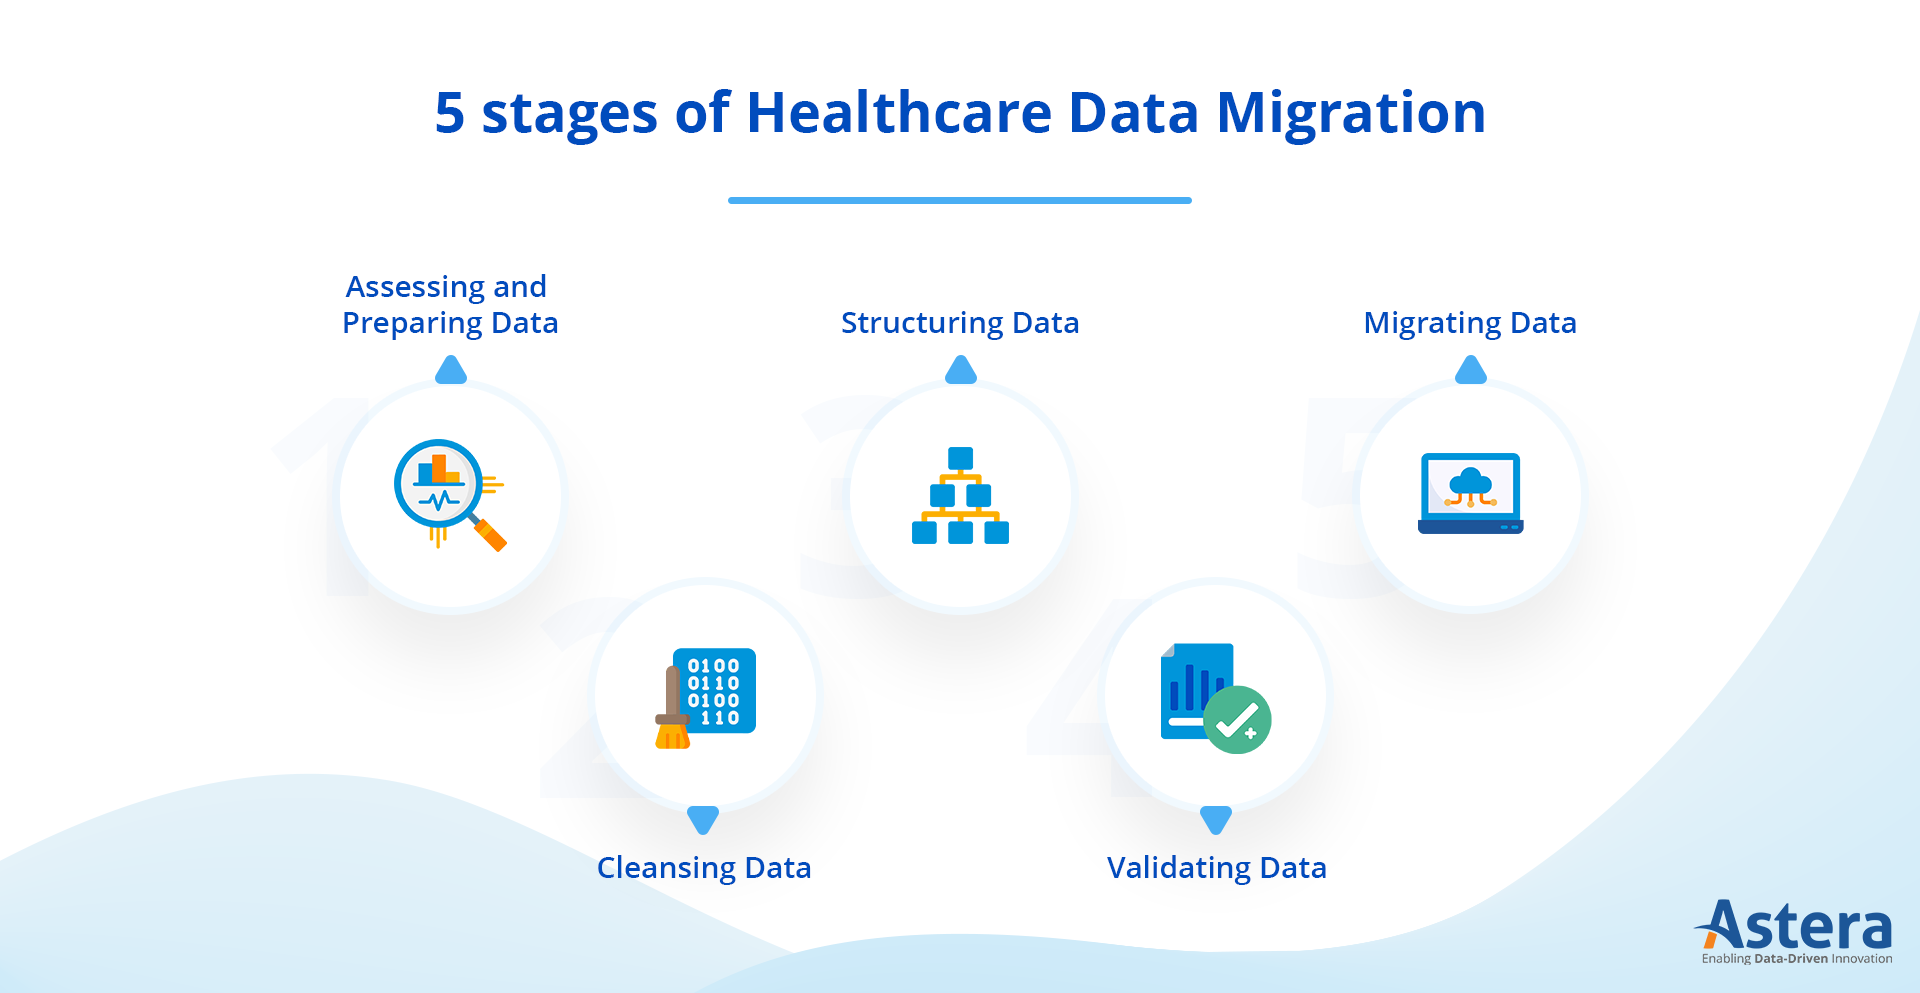 Healthcare data migration